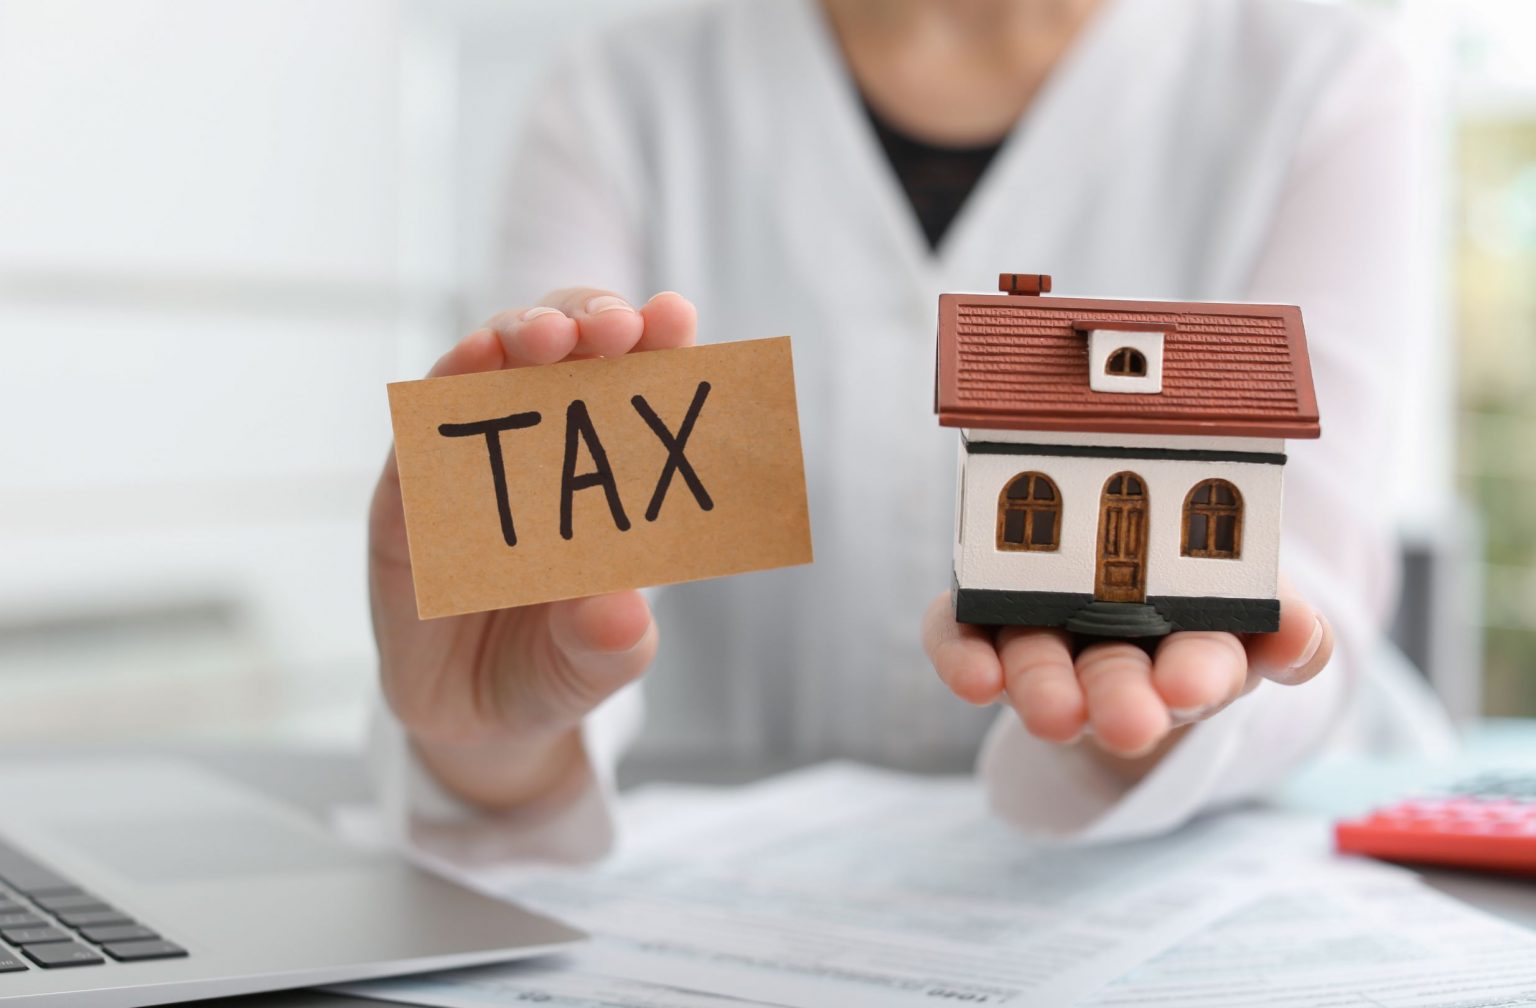 nj-property-tax-relief-program-updates-access-wealth